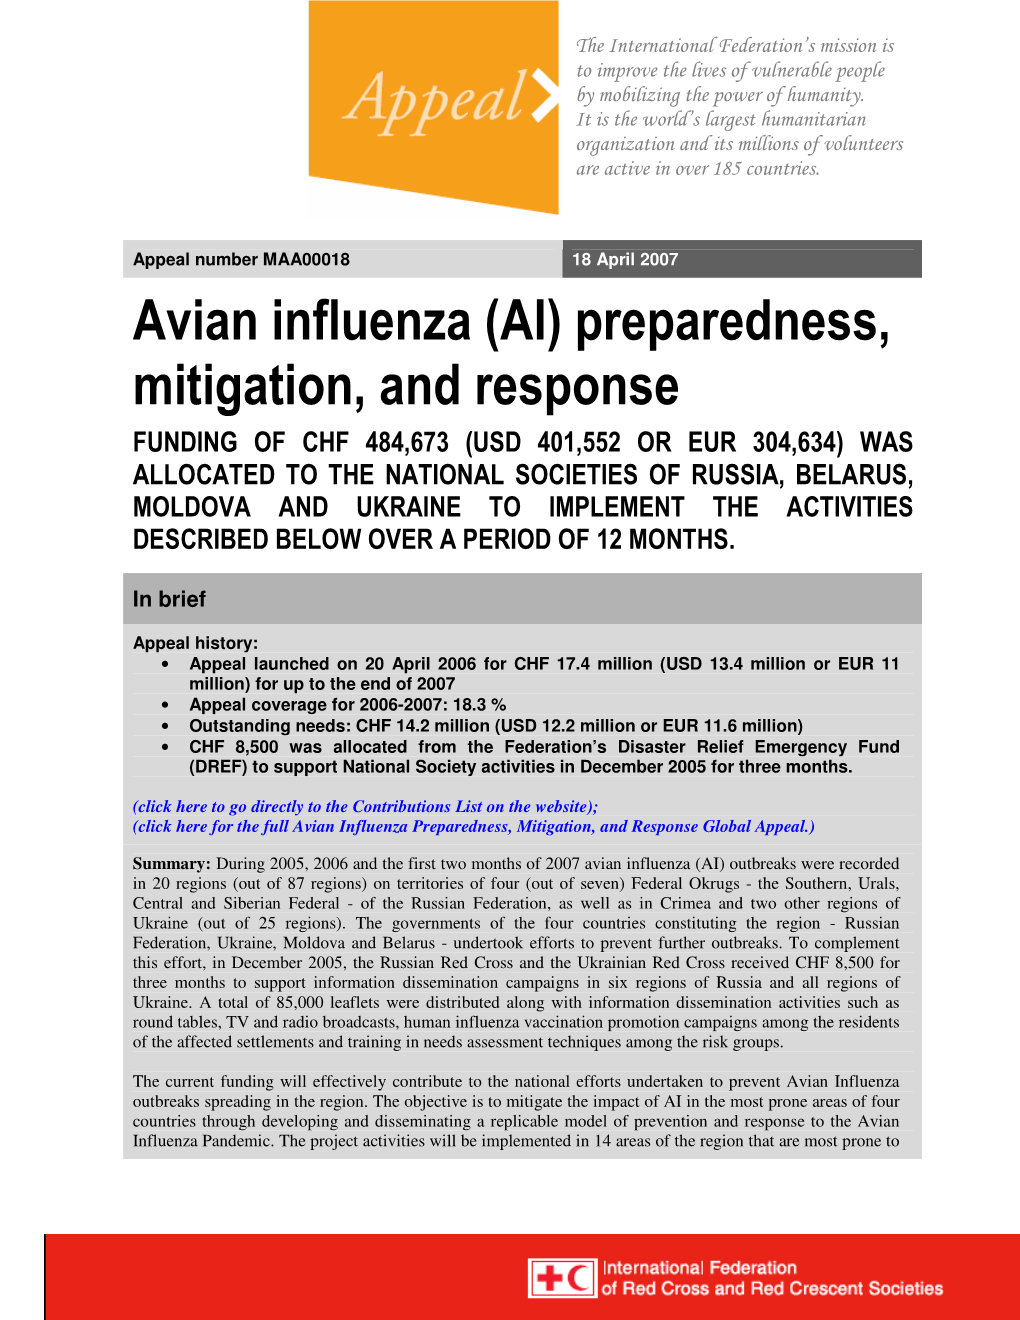 Avian Influenza (AI) Preparedness, Mitigation, and Response